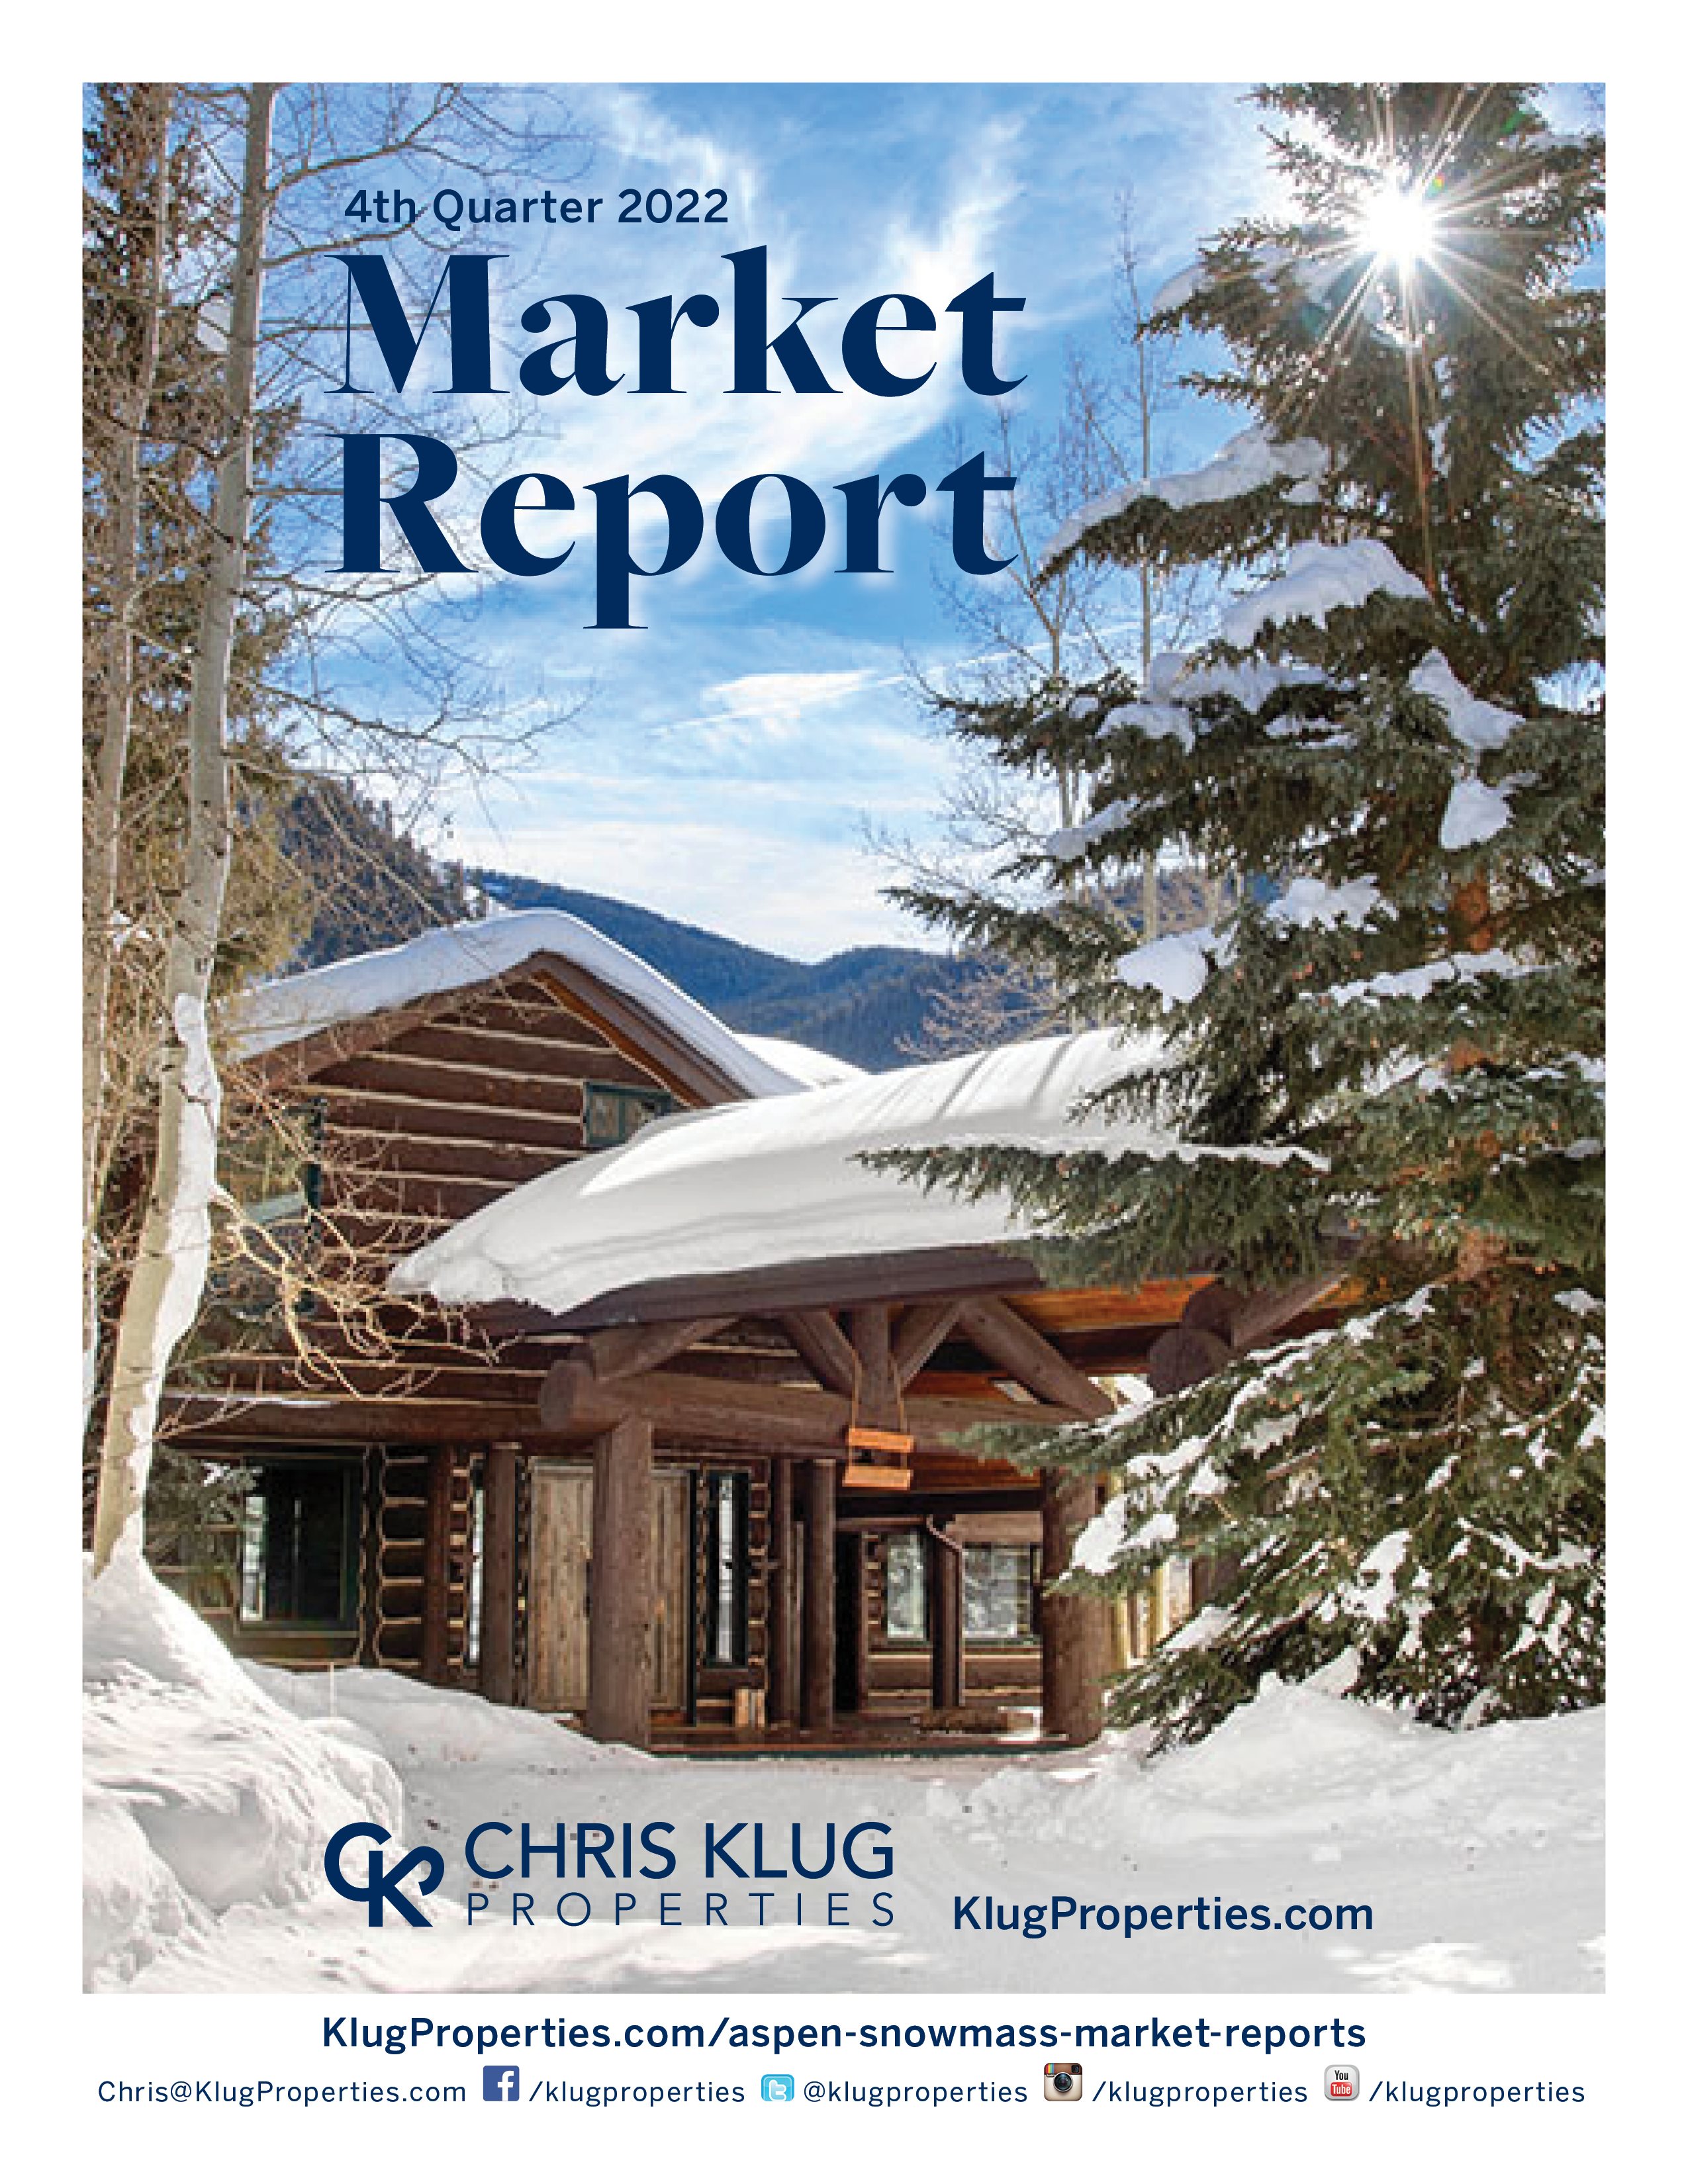 Aspen Snowmass Real Estate Market Reports | Klug Properties - Chris ...